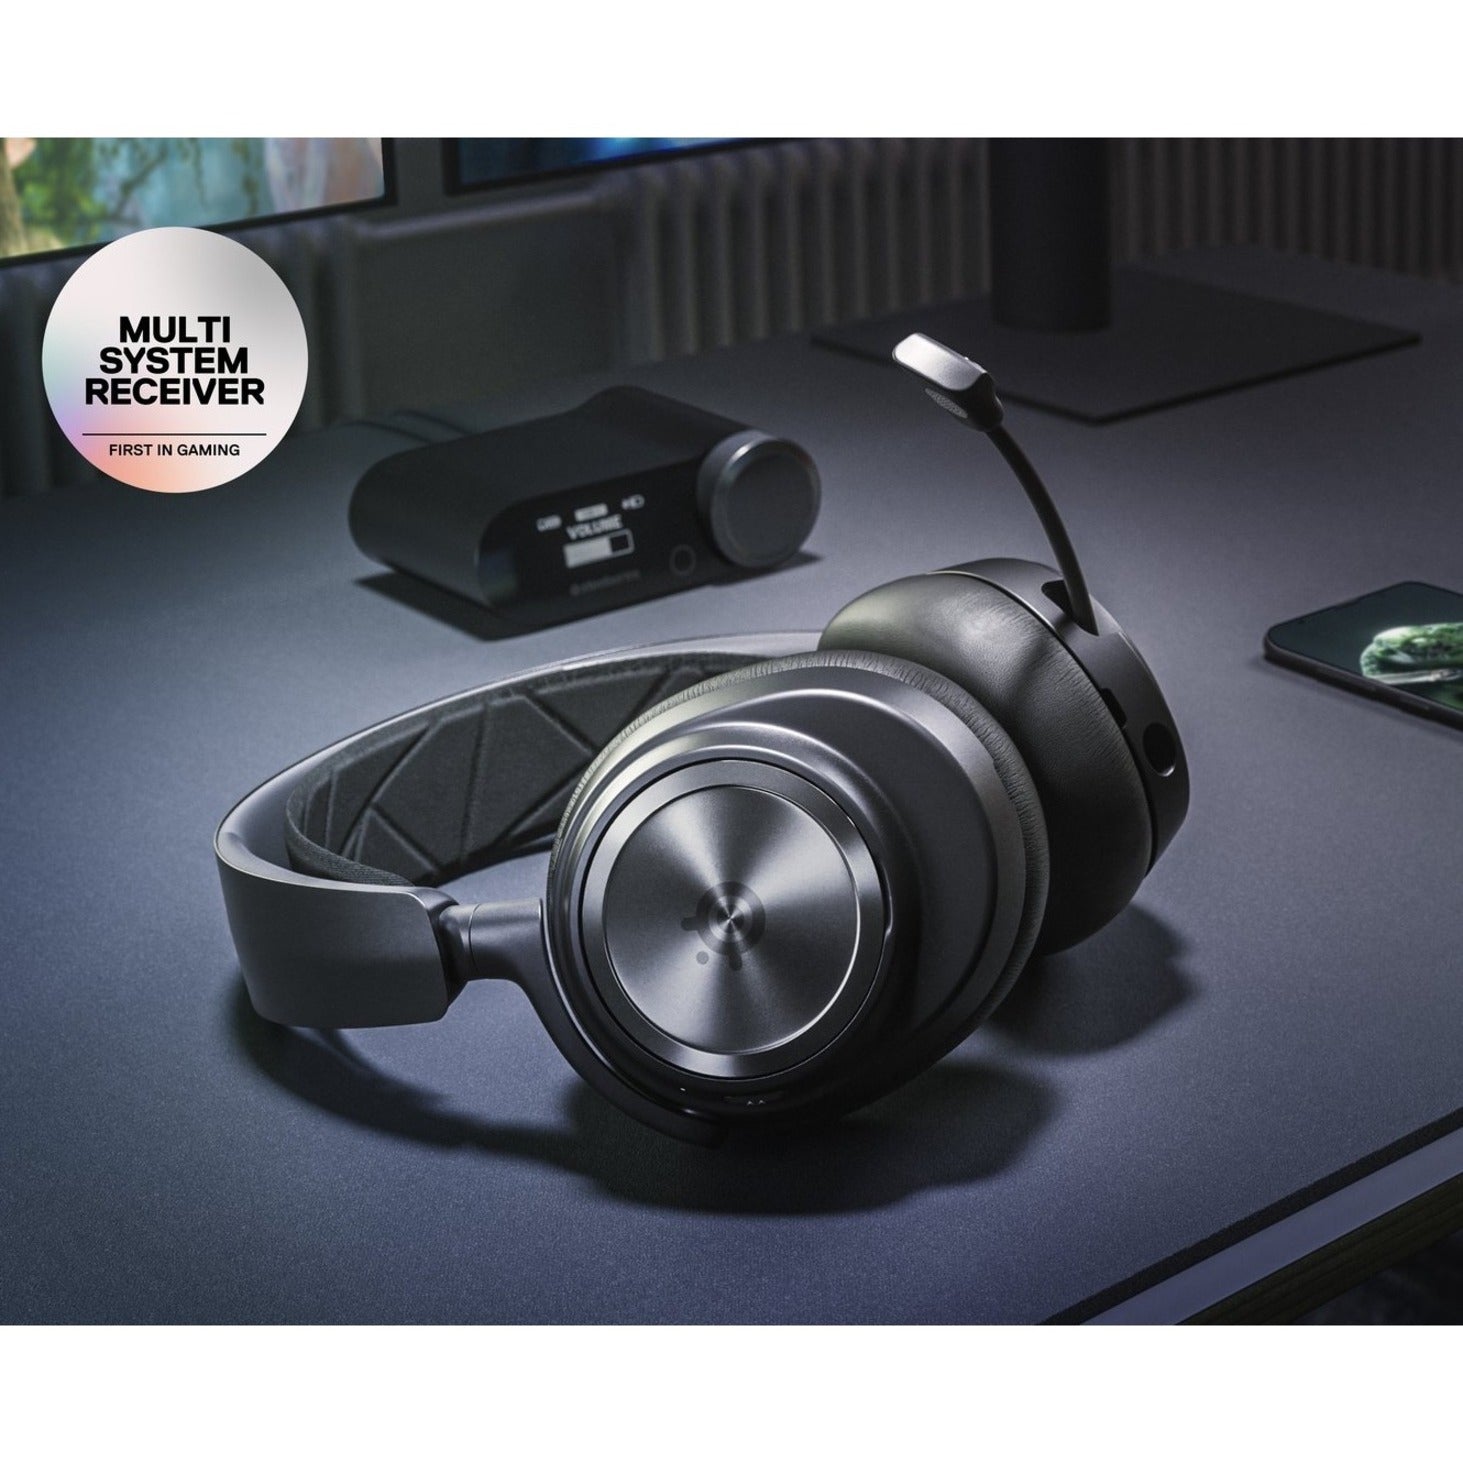 SteelSeries Arctis Nova Pro wireless headset review: A gamer's delight